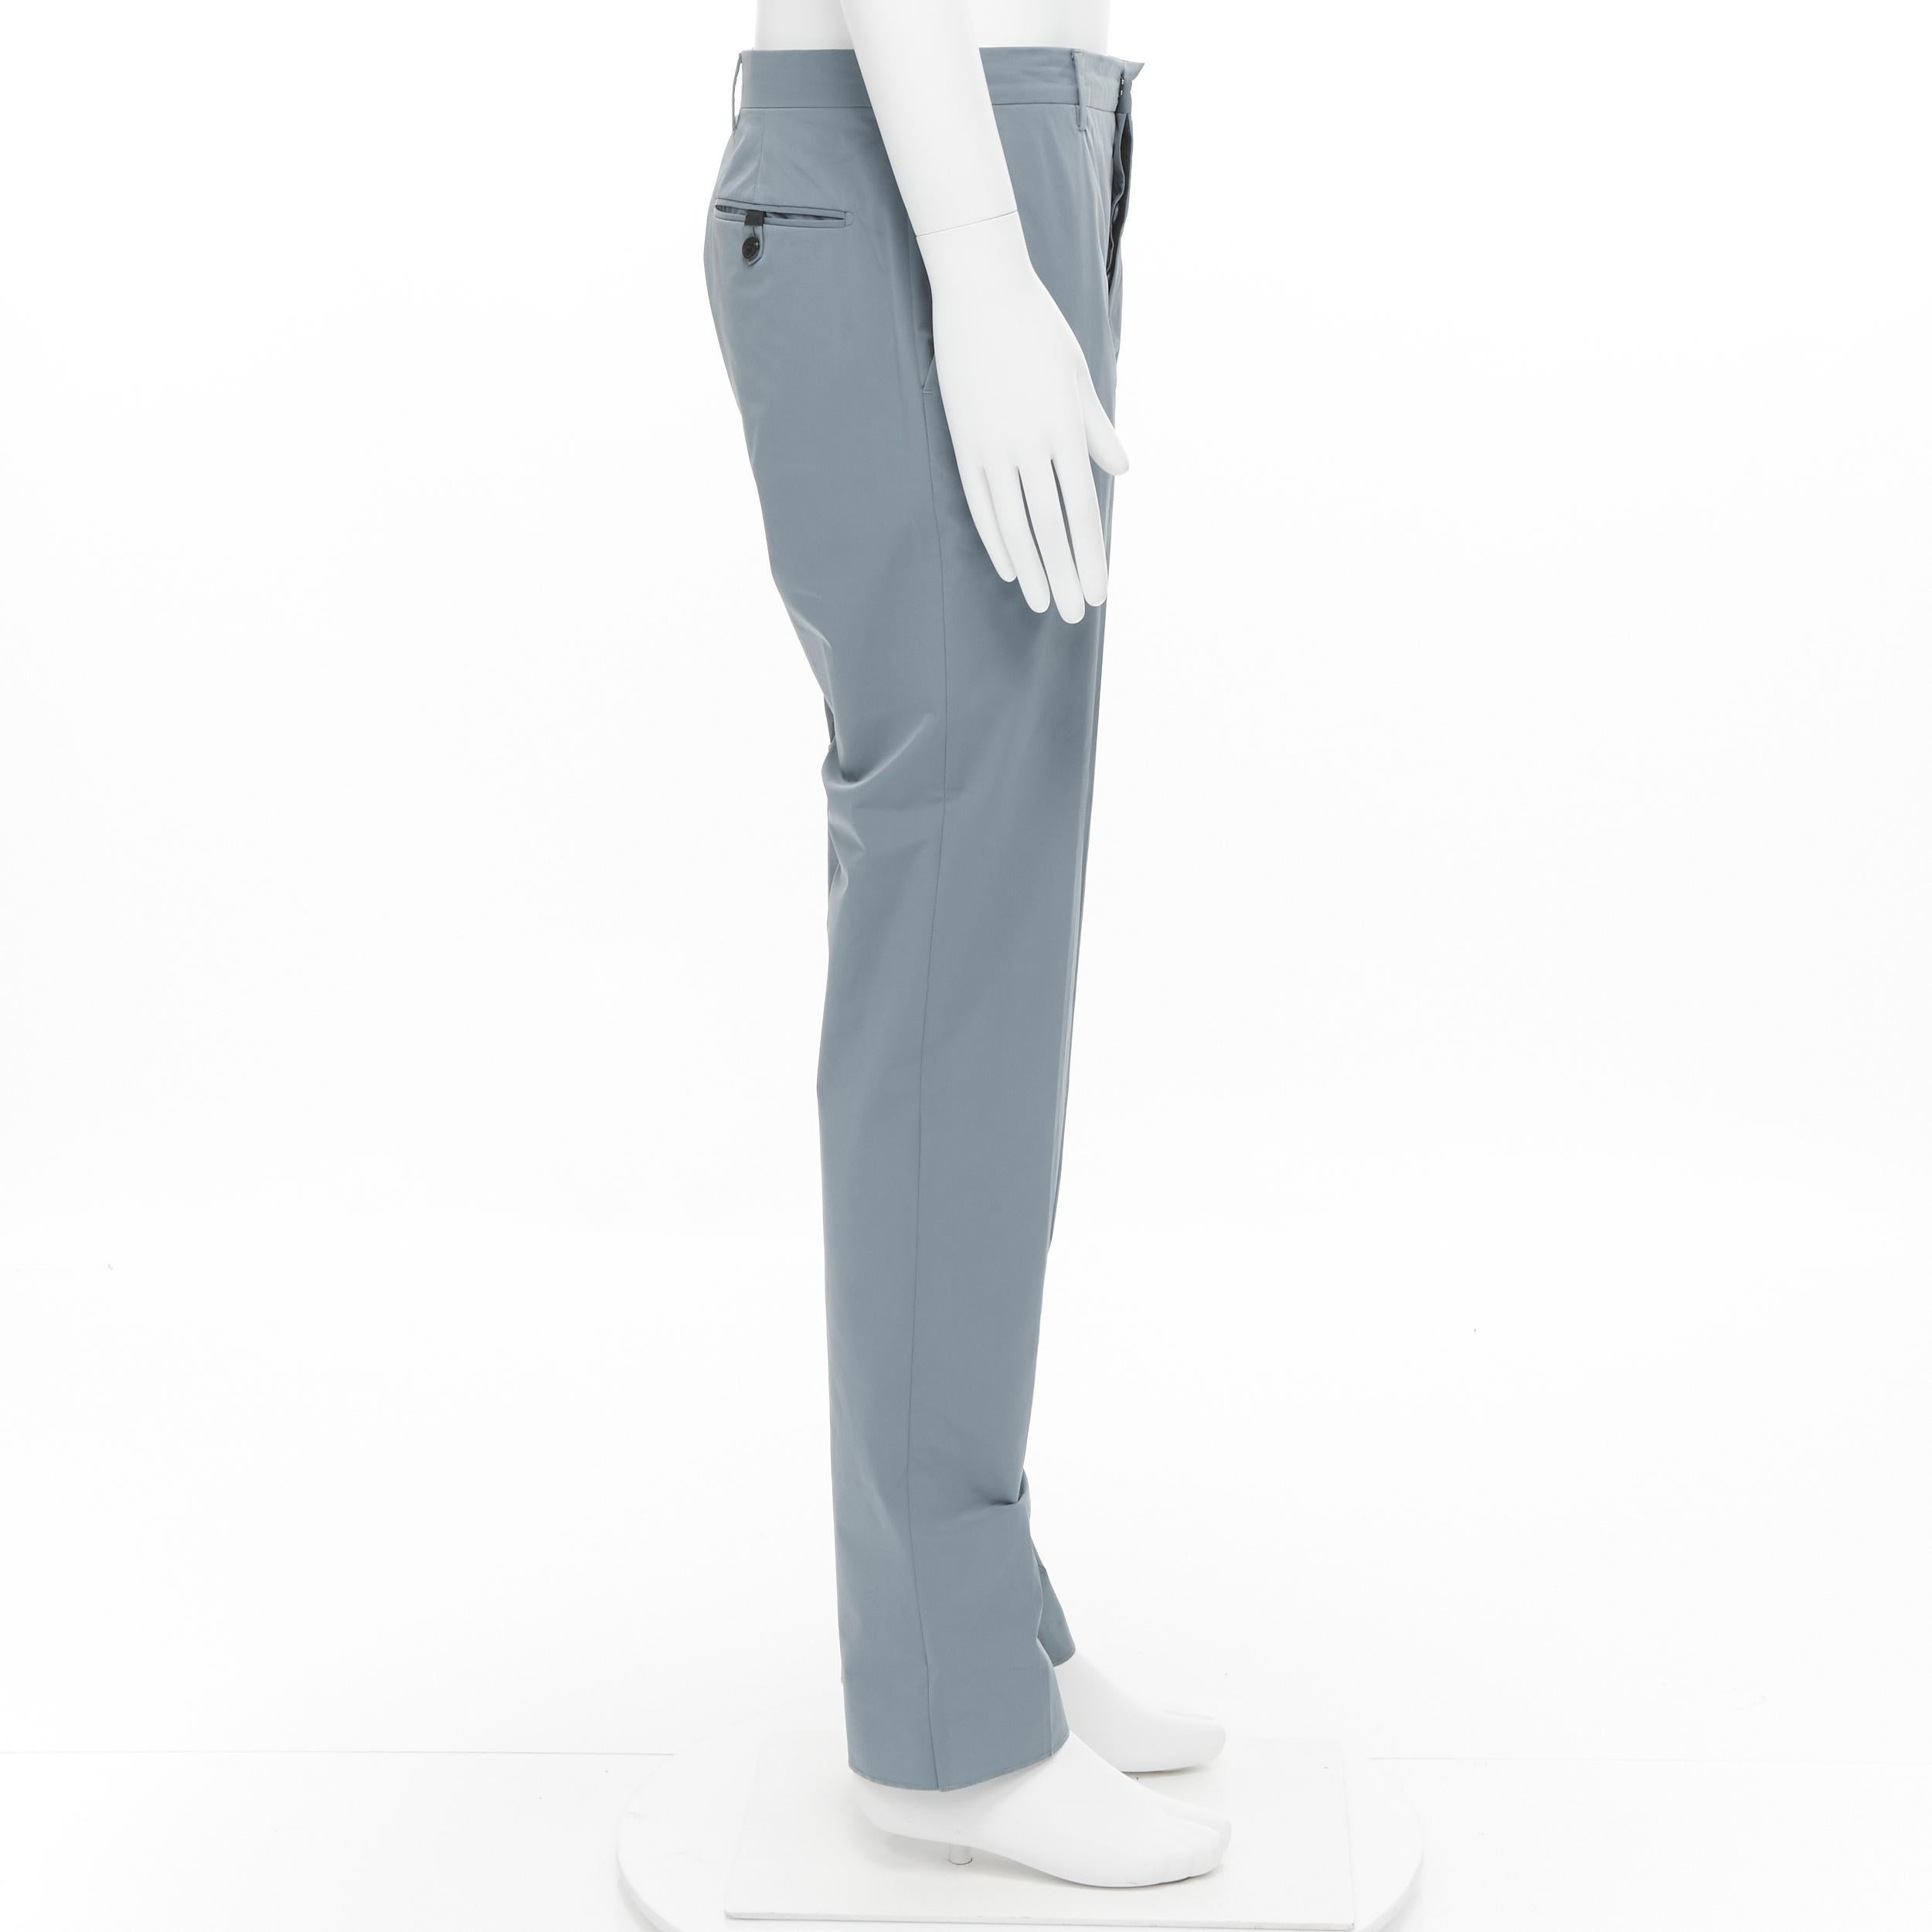 Blue PRADA 2017 teal blue polyester blend logo tag back pocket trousers pants IT48 M